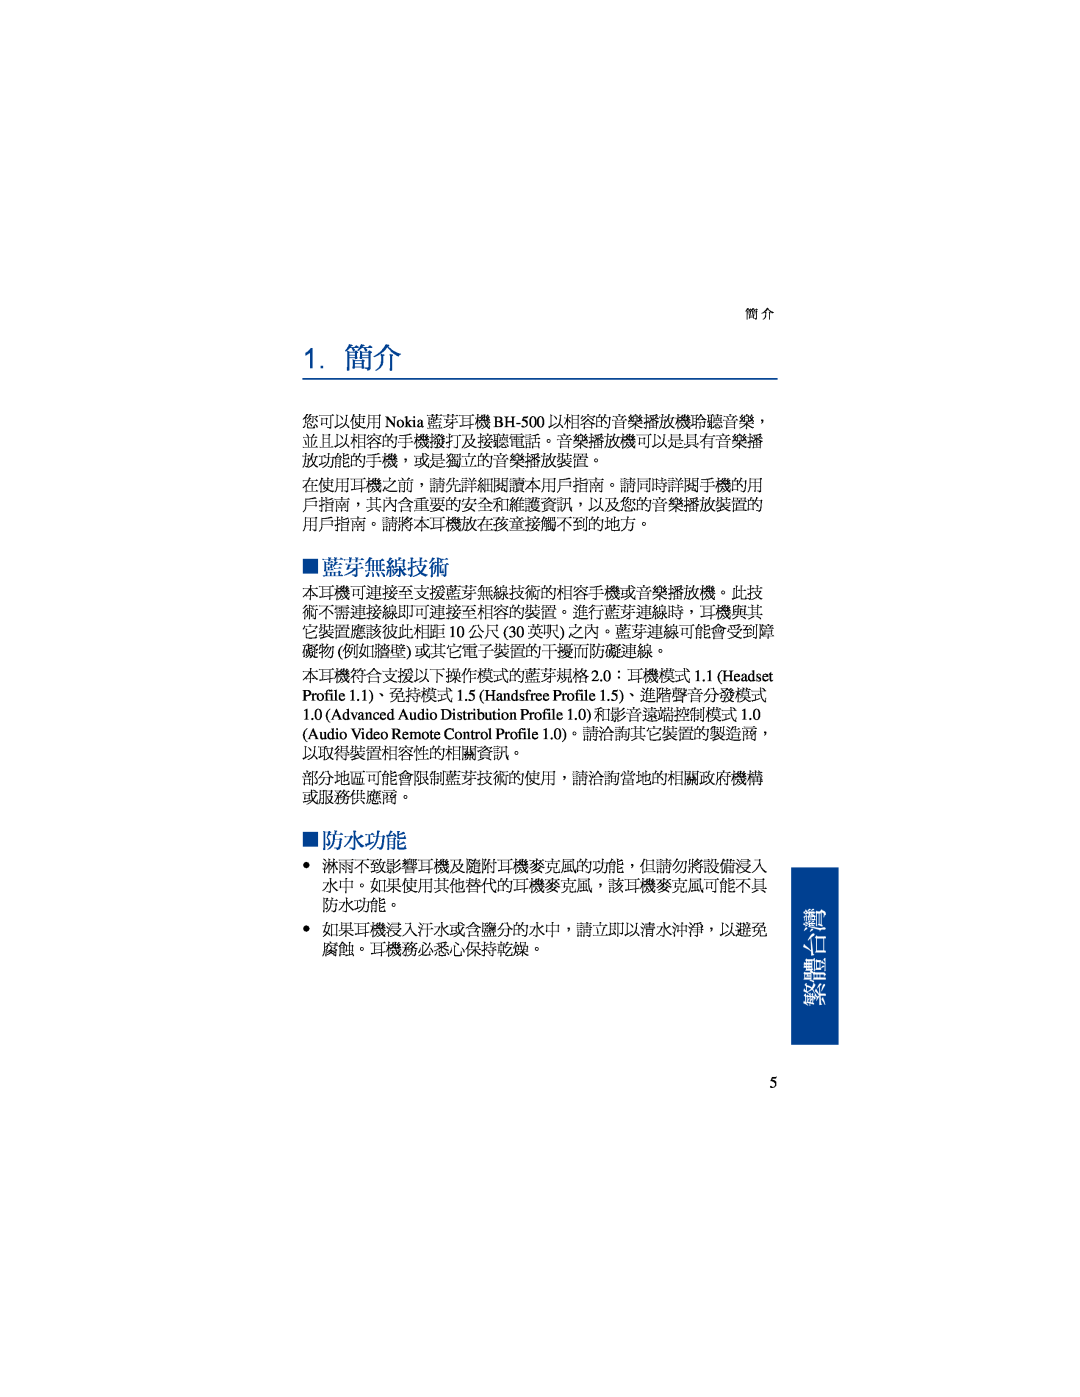 Nokia BH-500 manual 1.簡介, 藍芽無線技術, 防水功能, 繁體台灣 